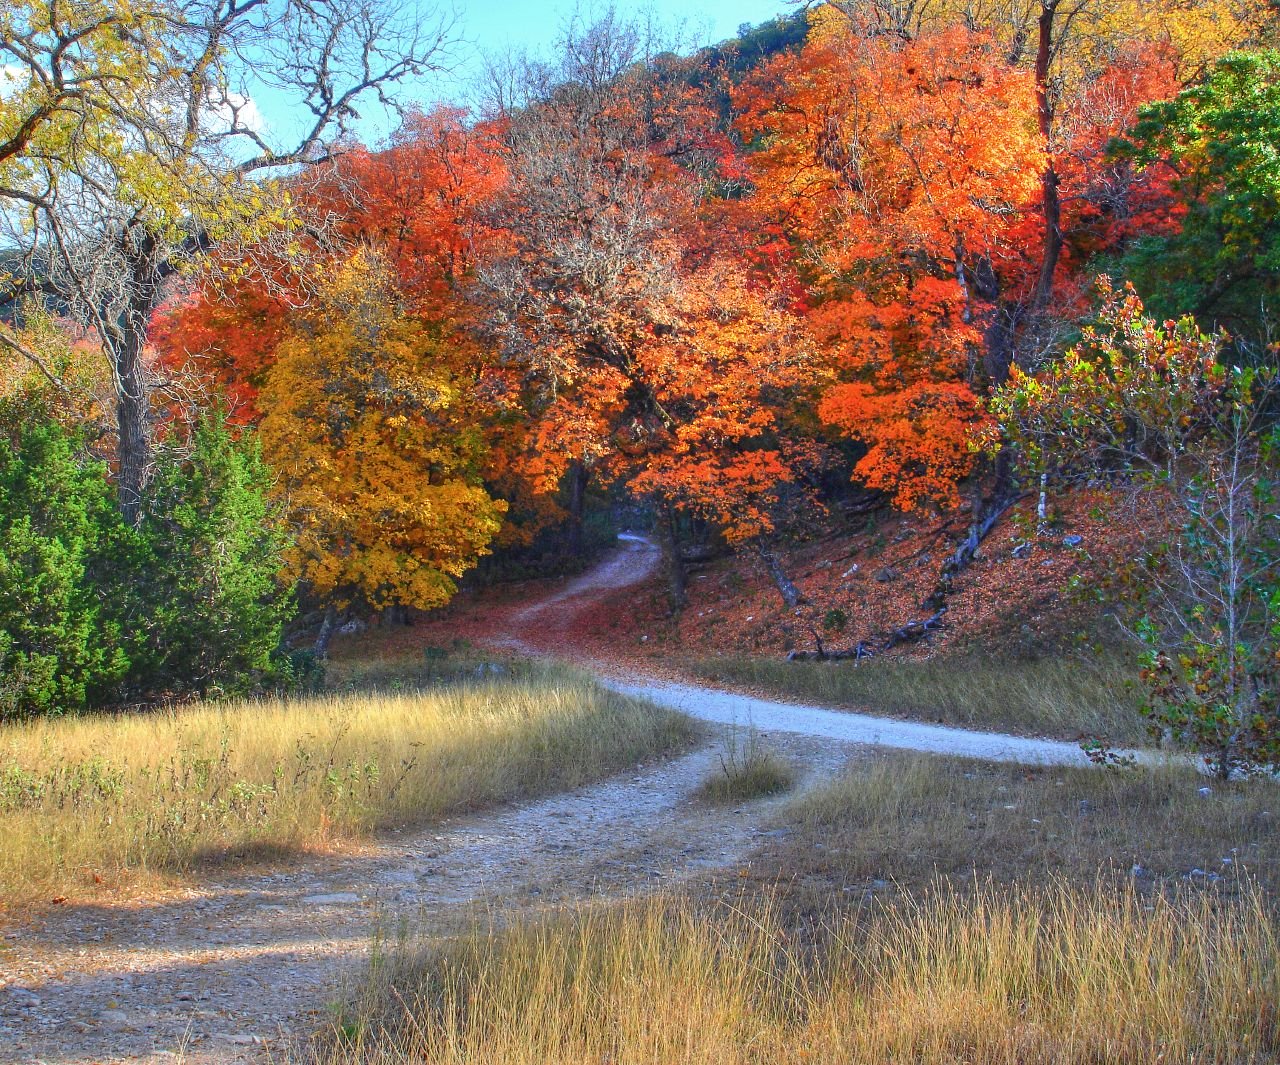 Fall eguide East-Texas-fall-leaves-drives-tyler-tx-foilage-pumpkin 4d7c8_o-2